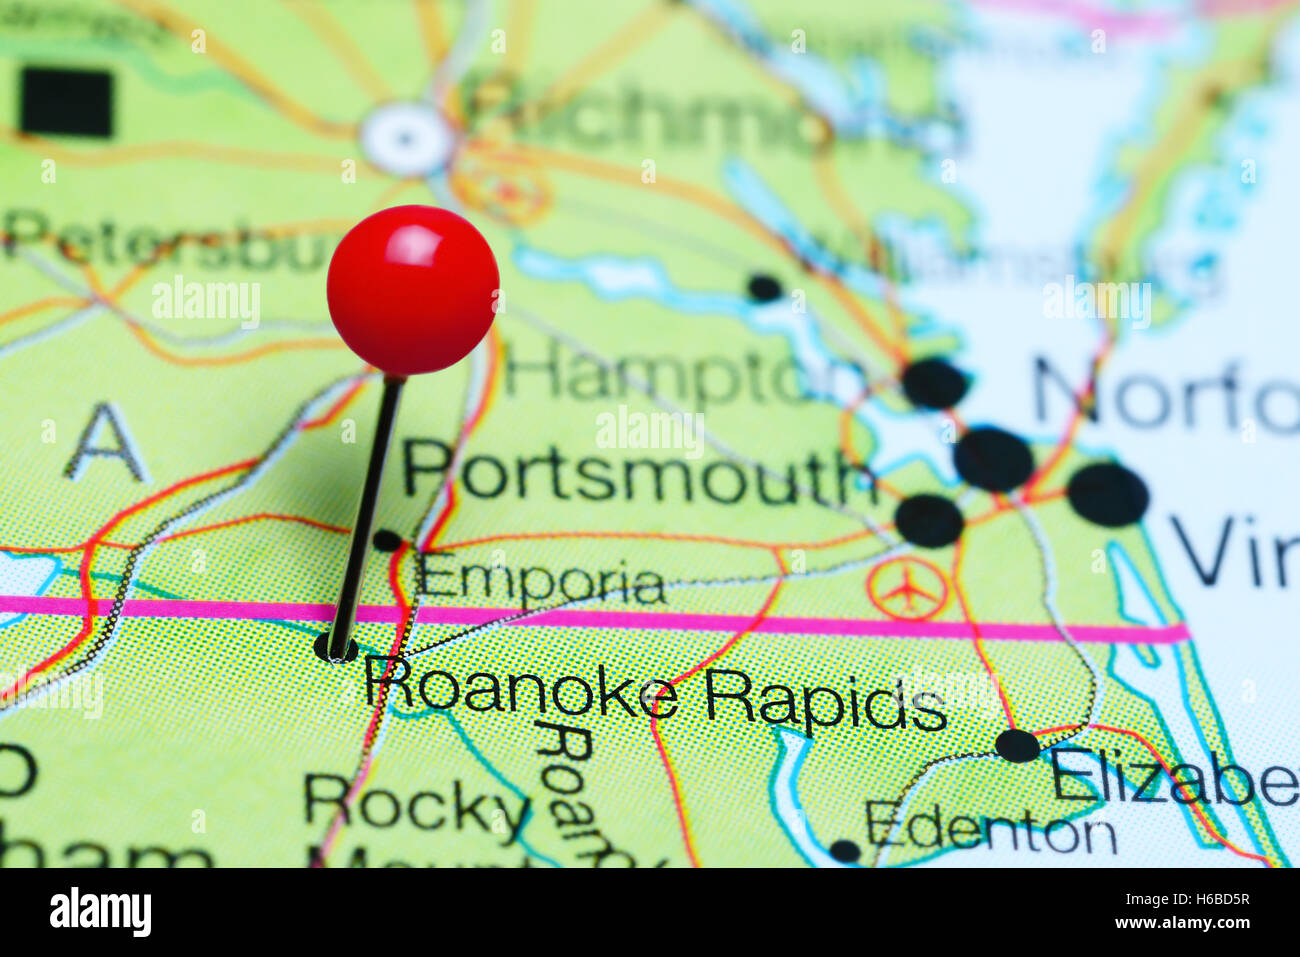 Roanoke Rapids pinned on a map of North Carolina, USA Stock Photo. 